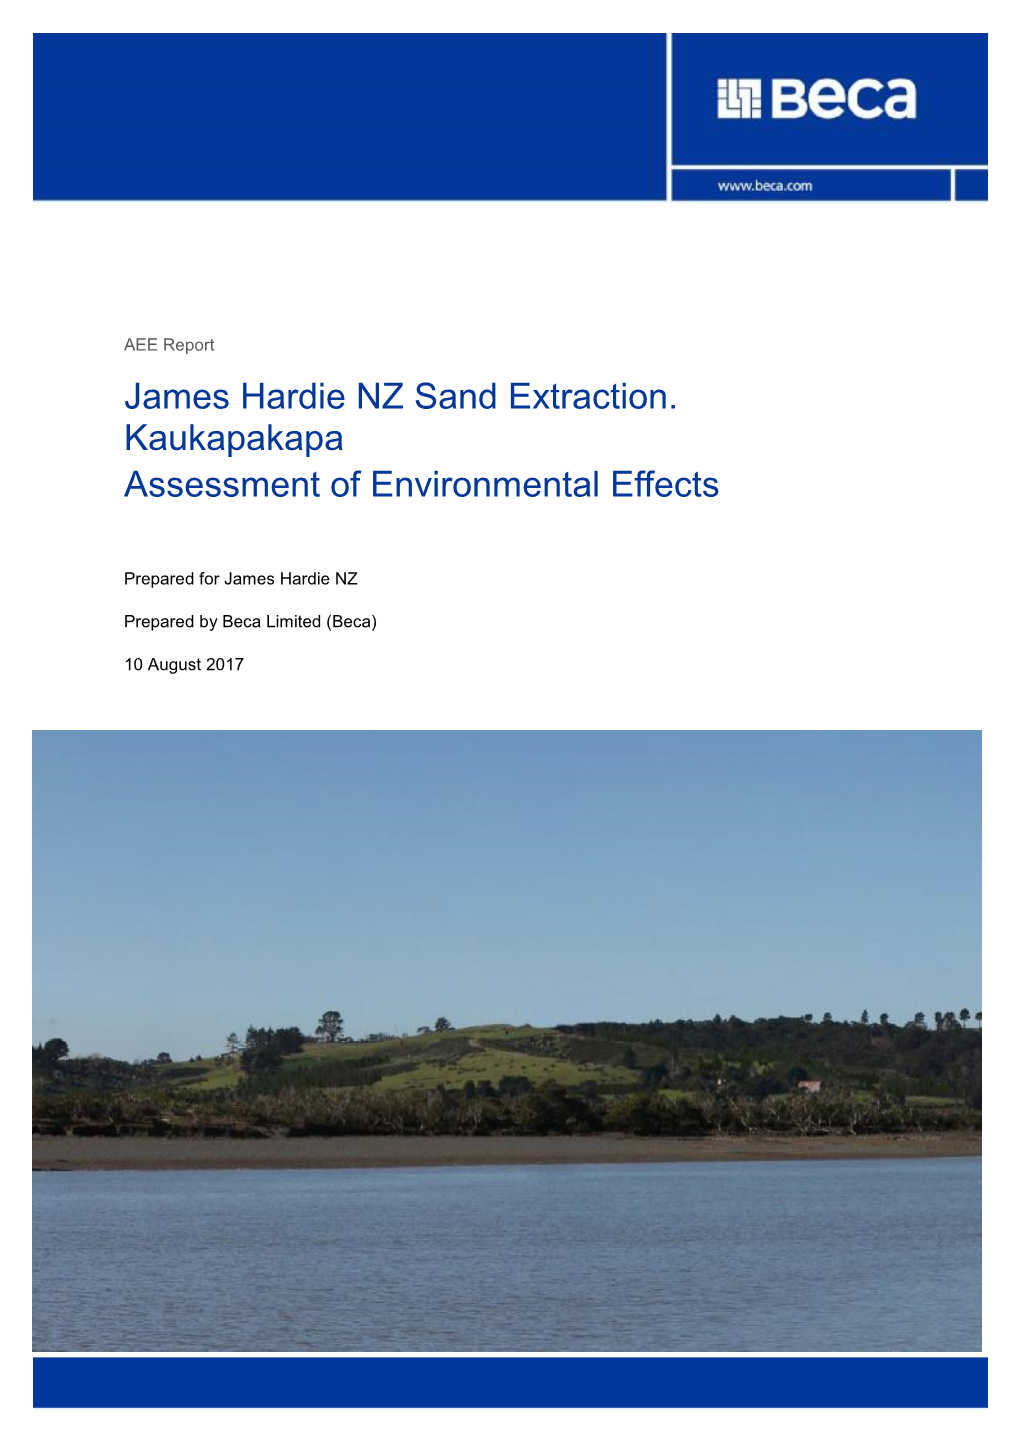 James Hardie NZ Sand Extraction. Kaukapakapa Assessment of Environmental Effects